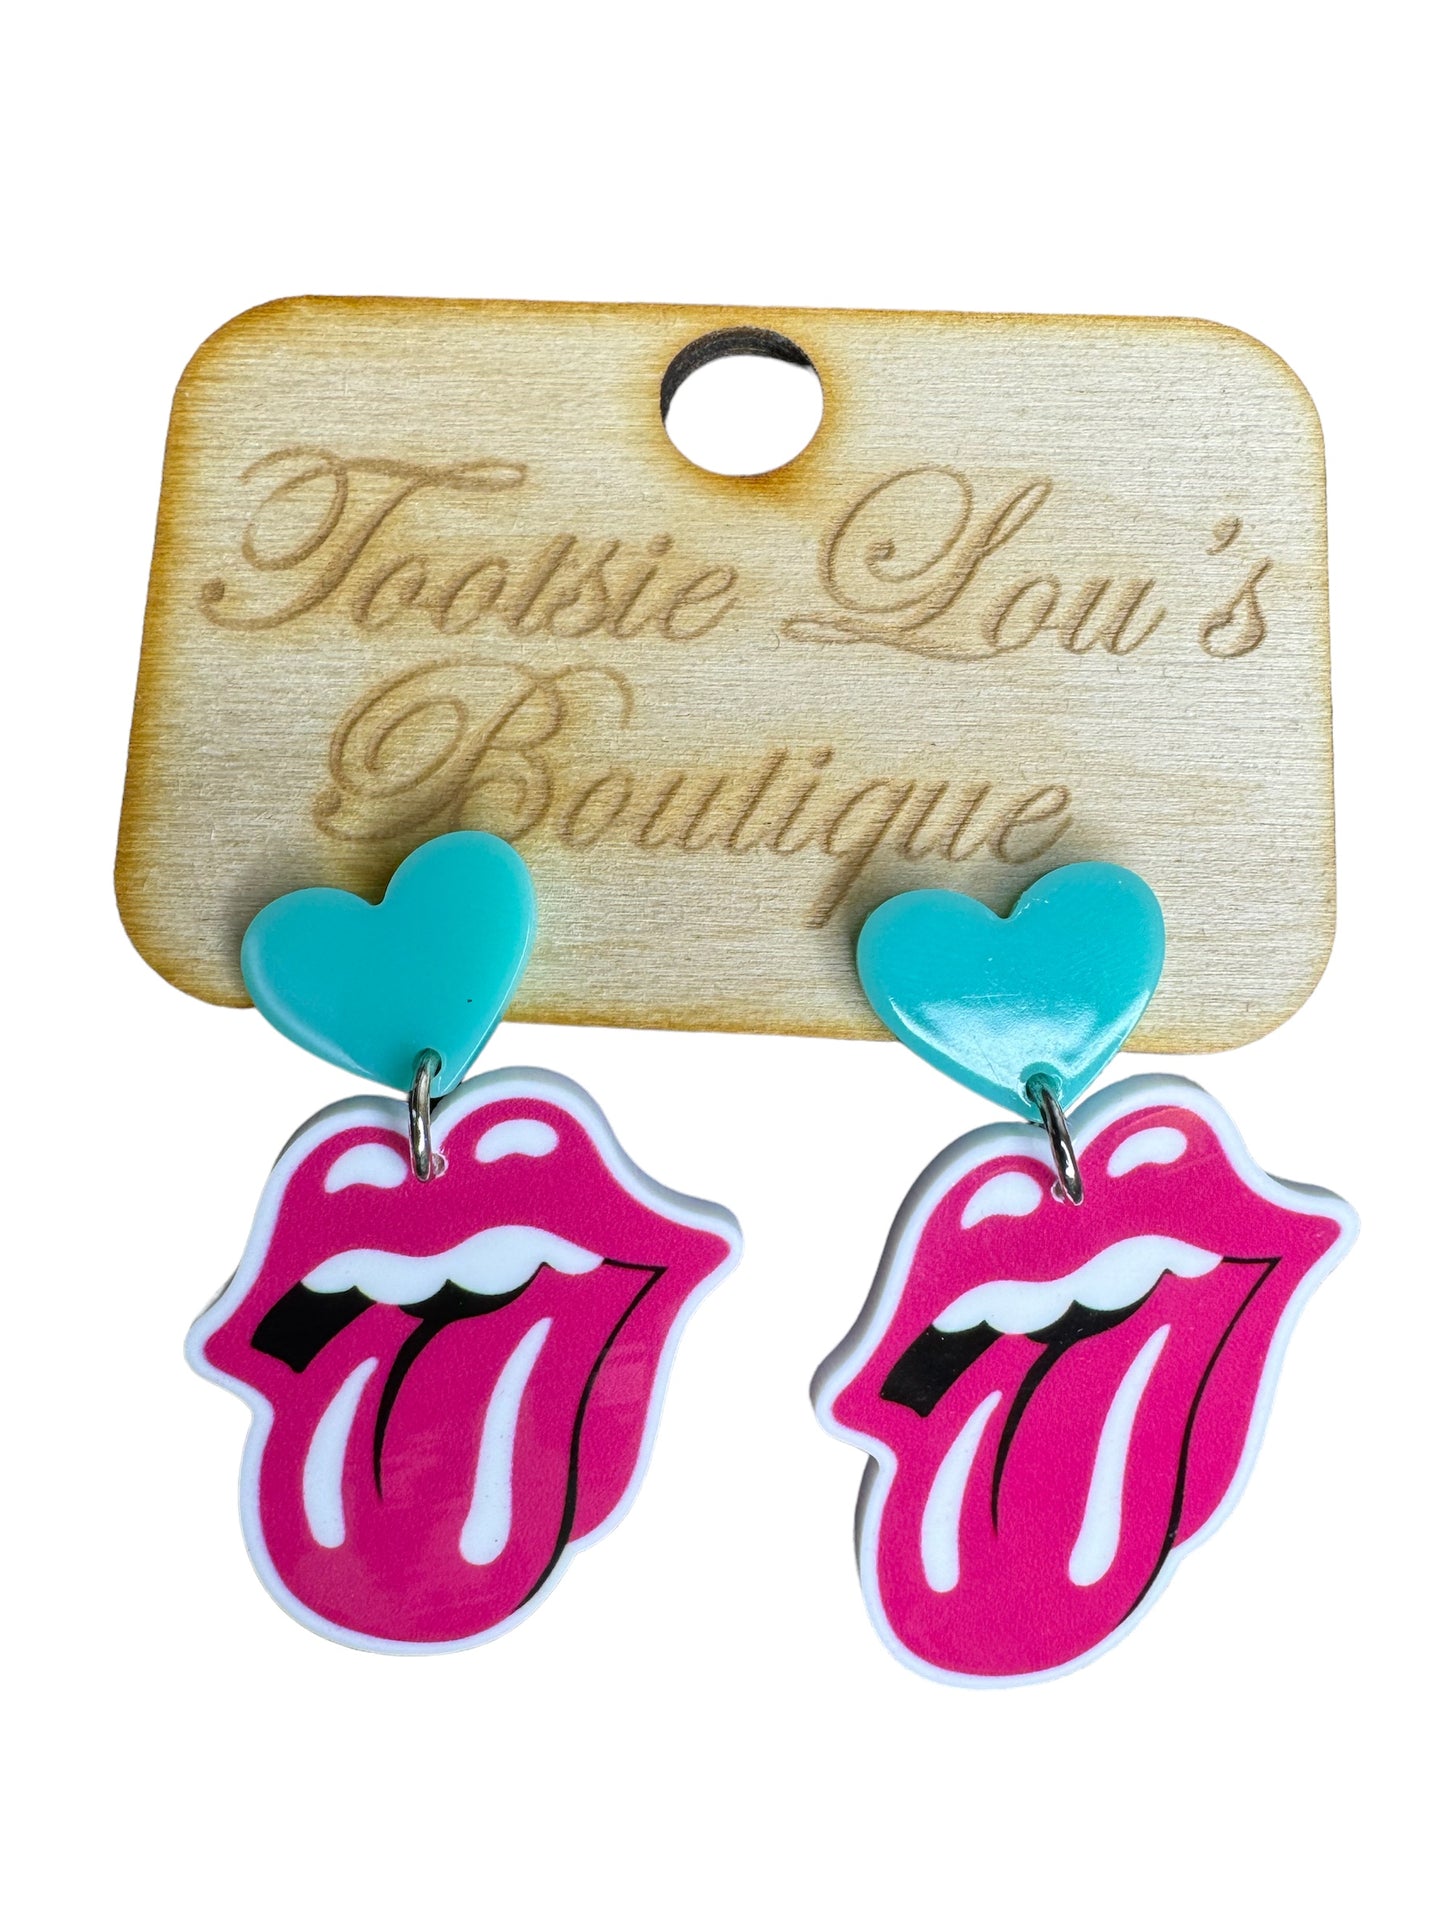 Rolling Stones Acrylic Earrings